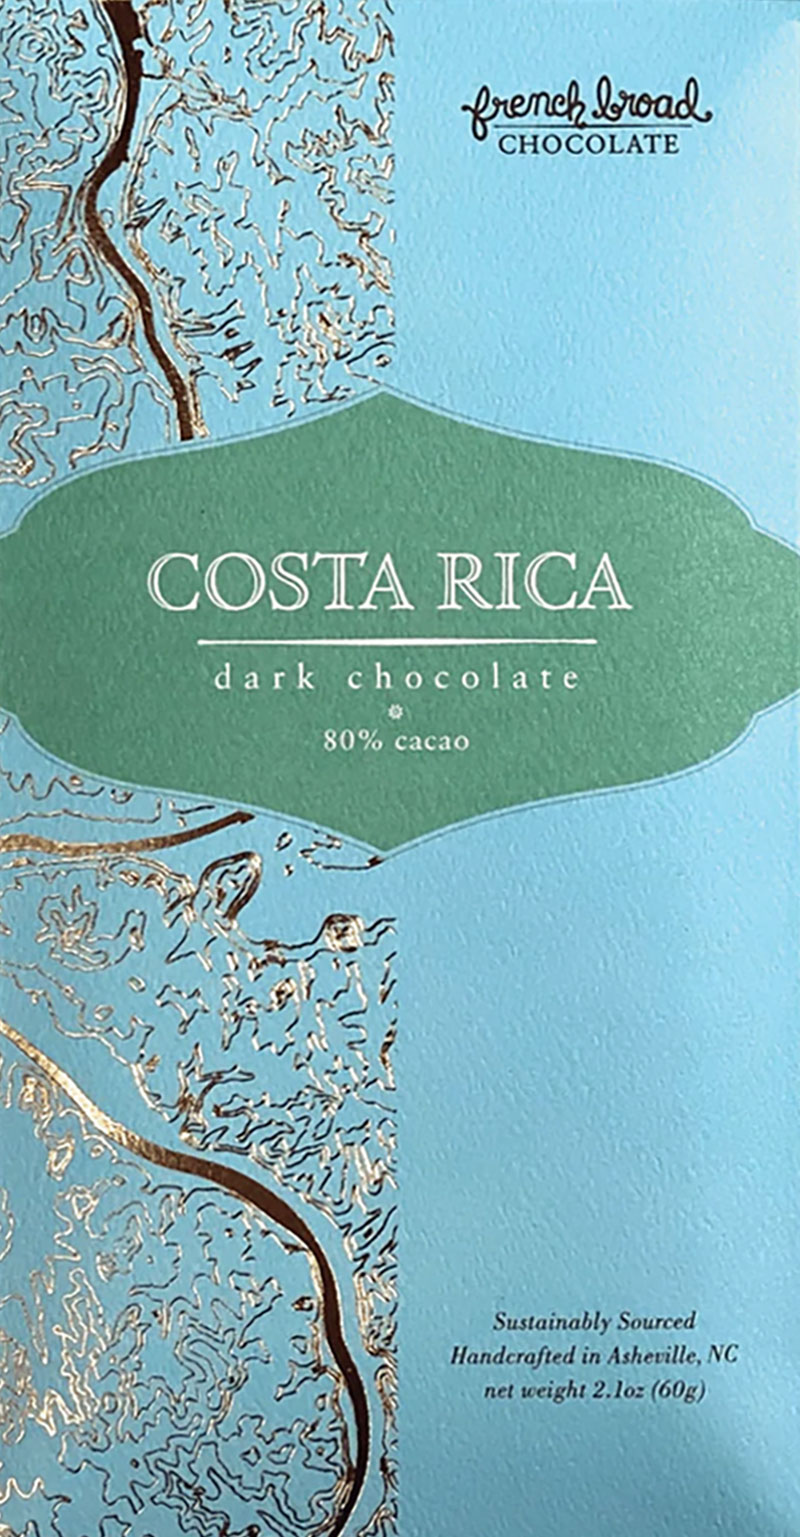 FRENCH BROAD | Schokolade »Costa Rica« 80% Kakaogehalt